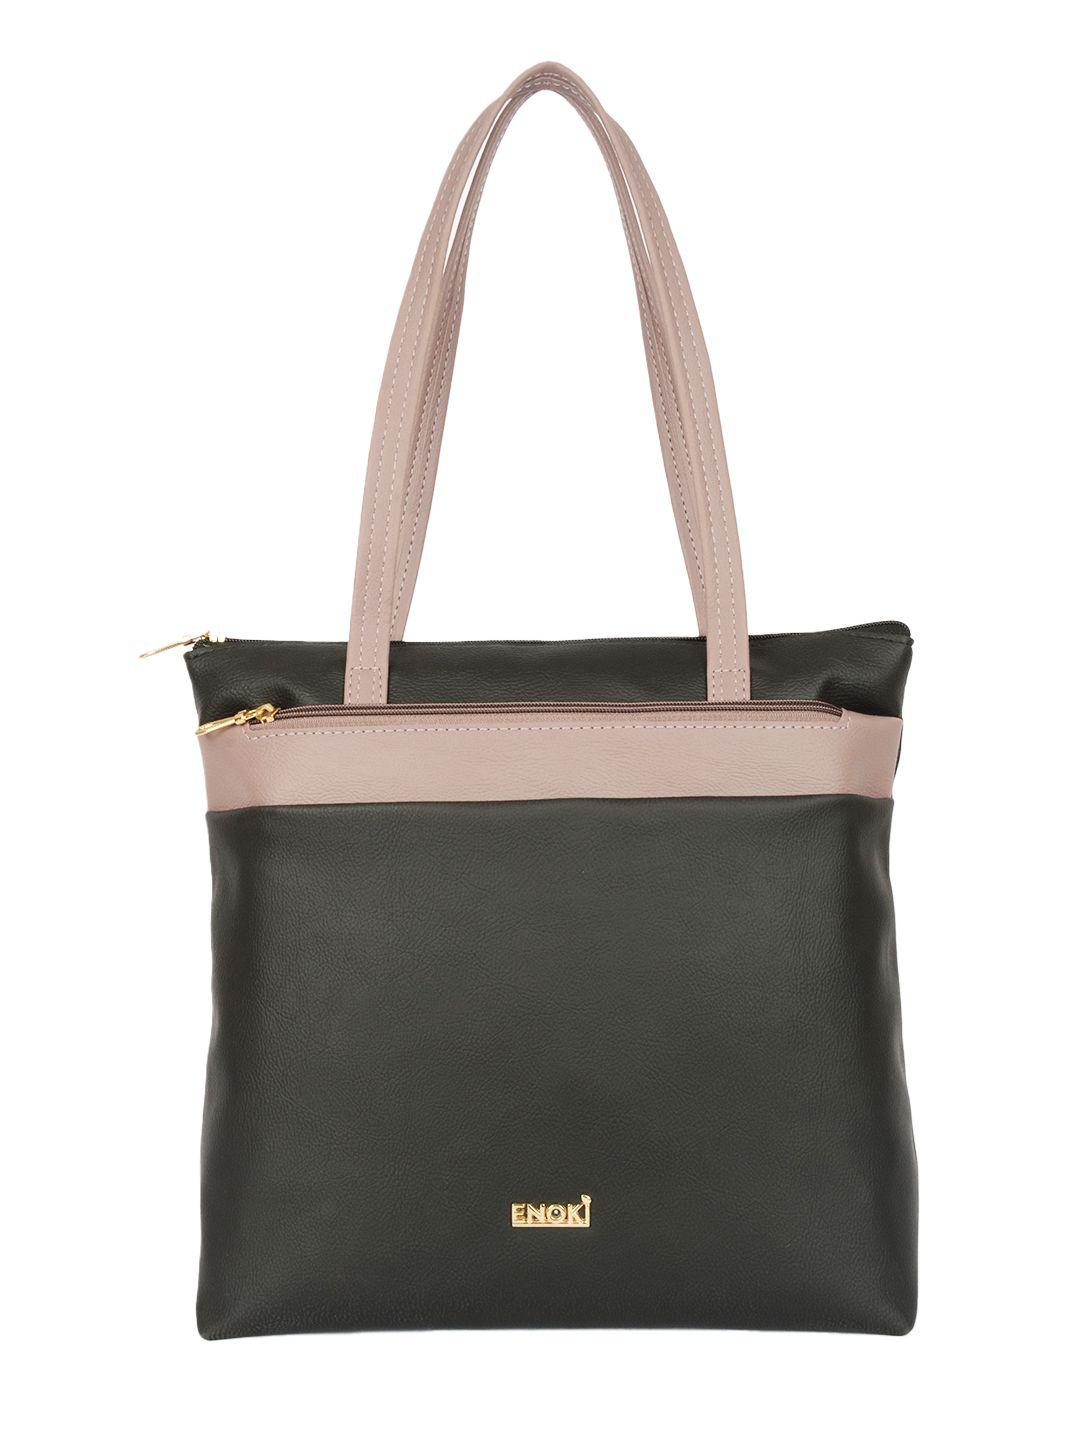 enoki-black-striped-shopper-tote-bag